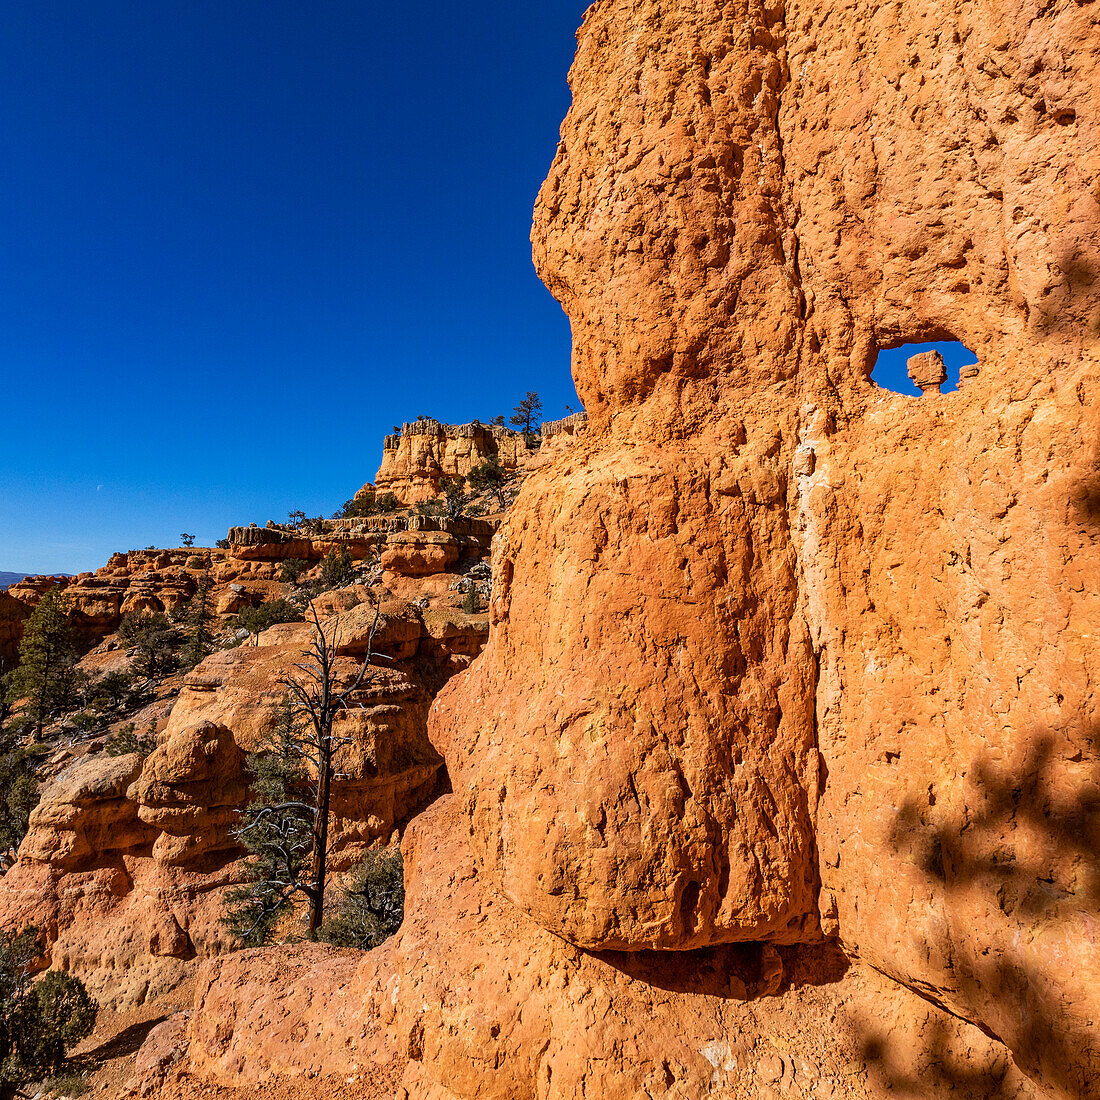 United States, Utah, Bryce Canyon National Park, Hoodoo rock formations